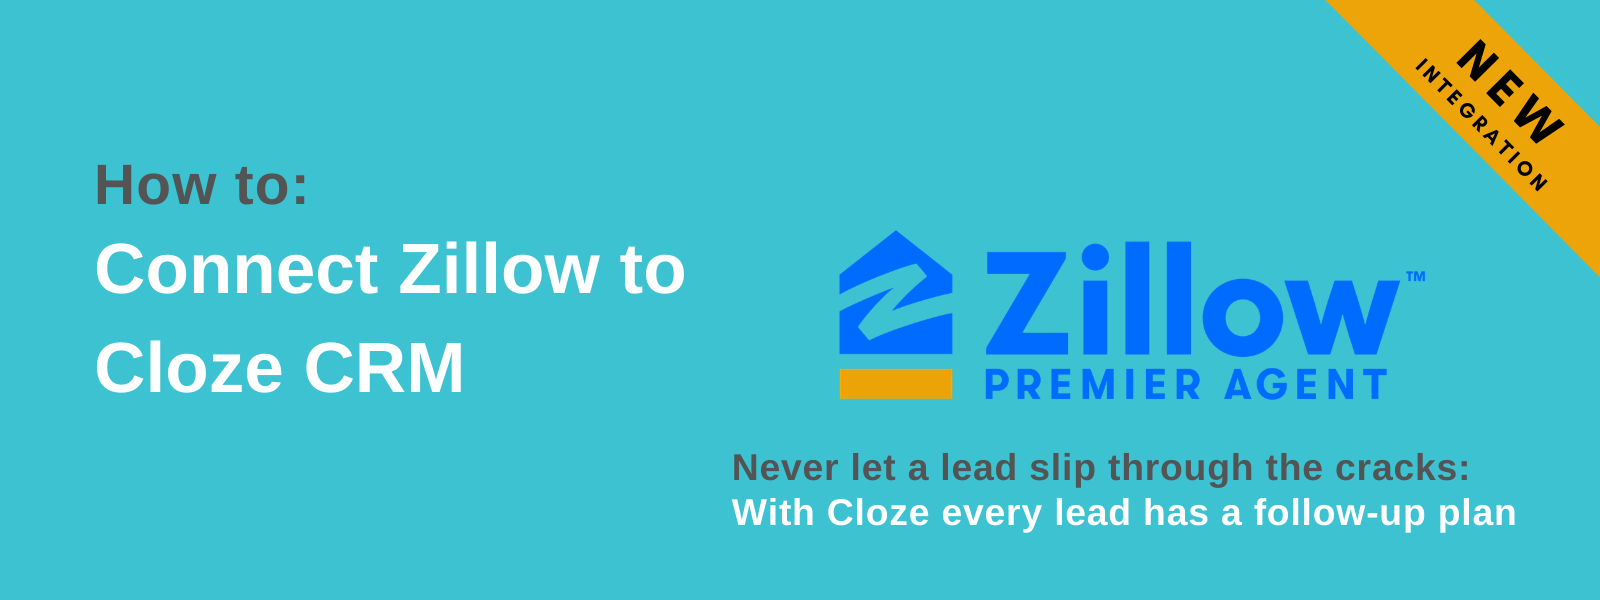 Connect Zillow Premier Agent to Cloze CRM. Never let a lead slip through the cracks.